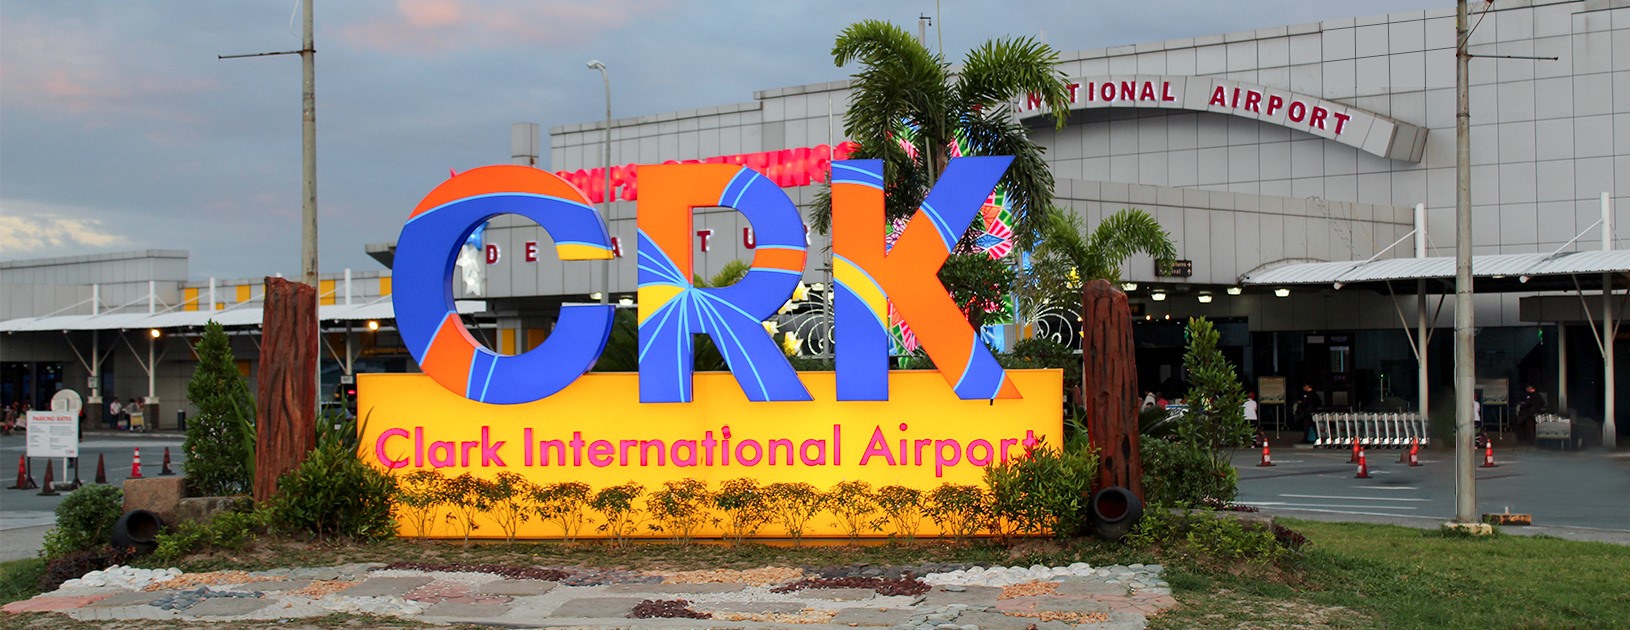 clark international airport careers